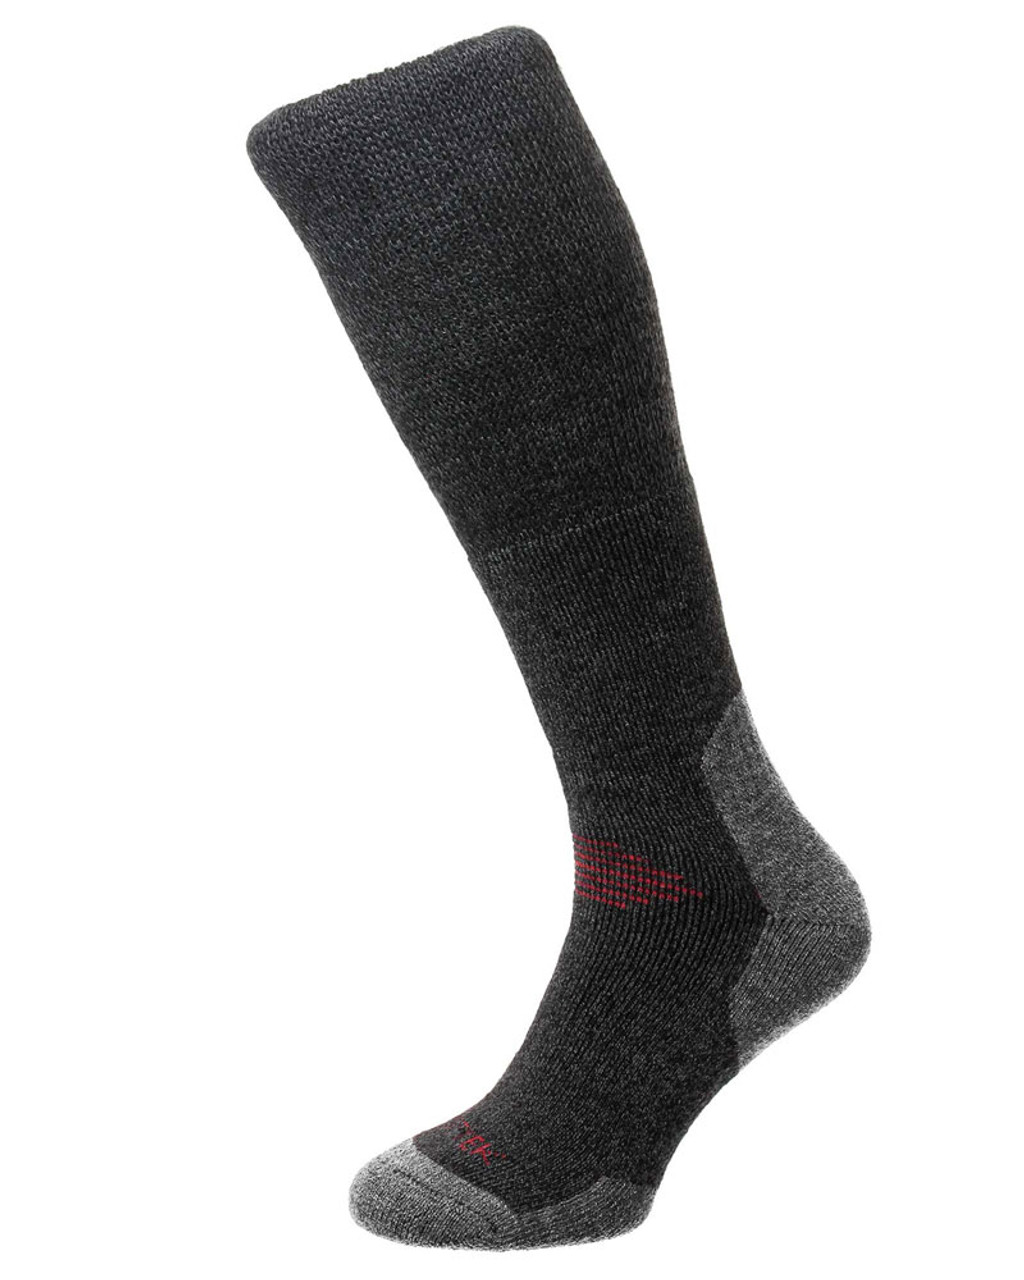 Hj ProTrek Mountain Comfort Top Walking Socks - Slate/Grey